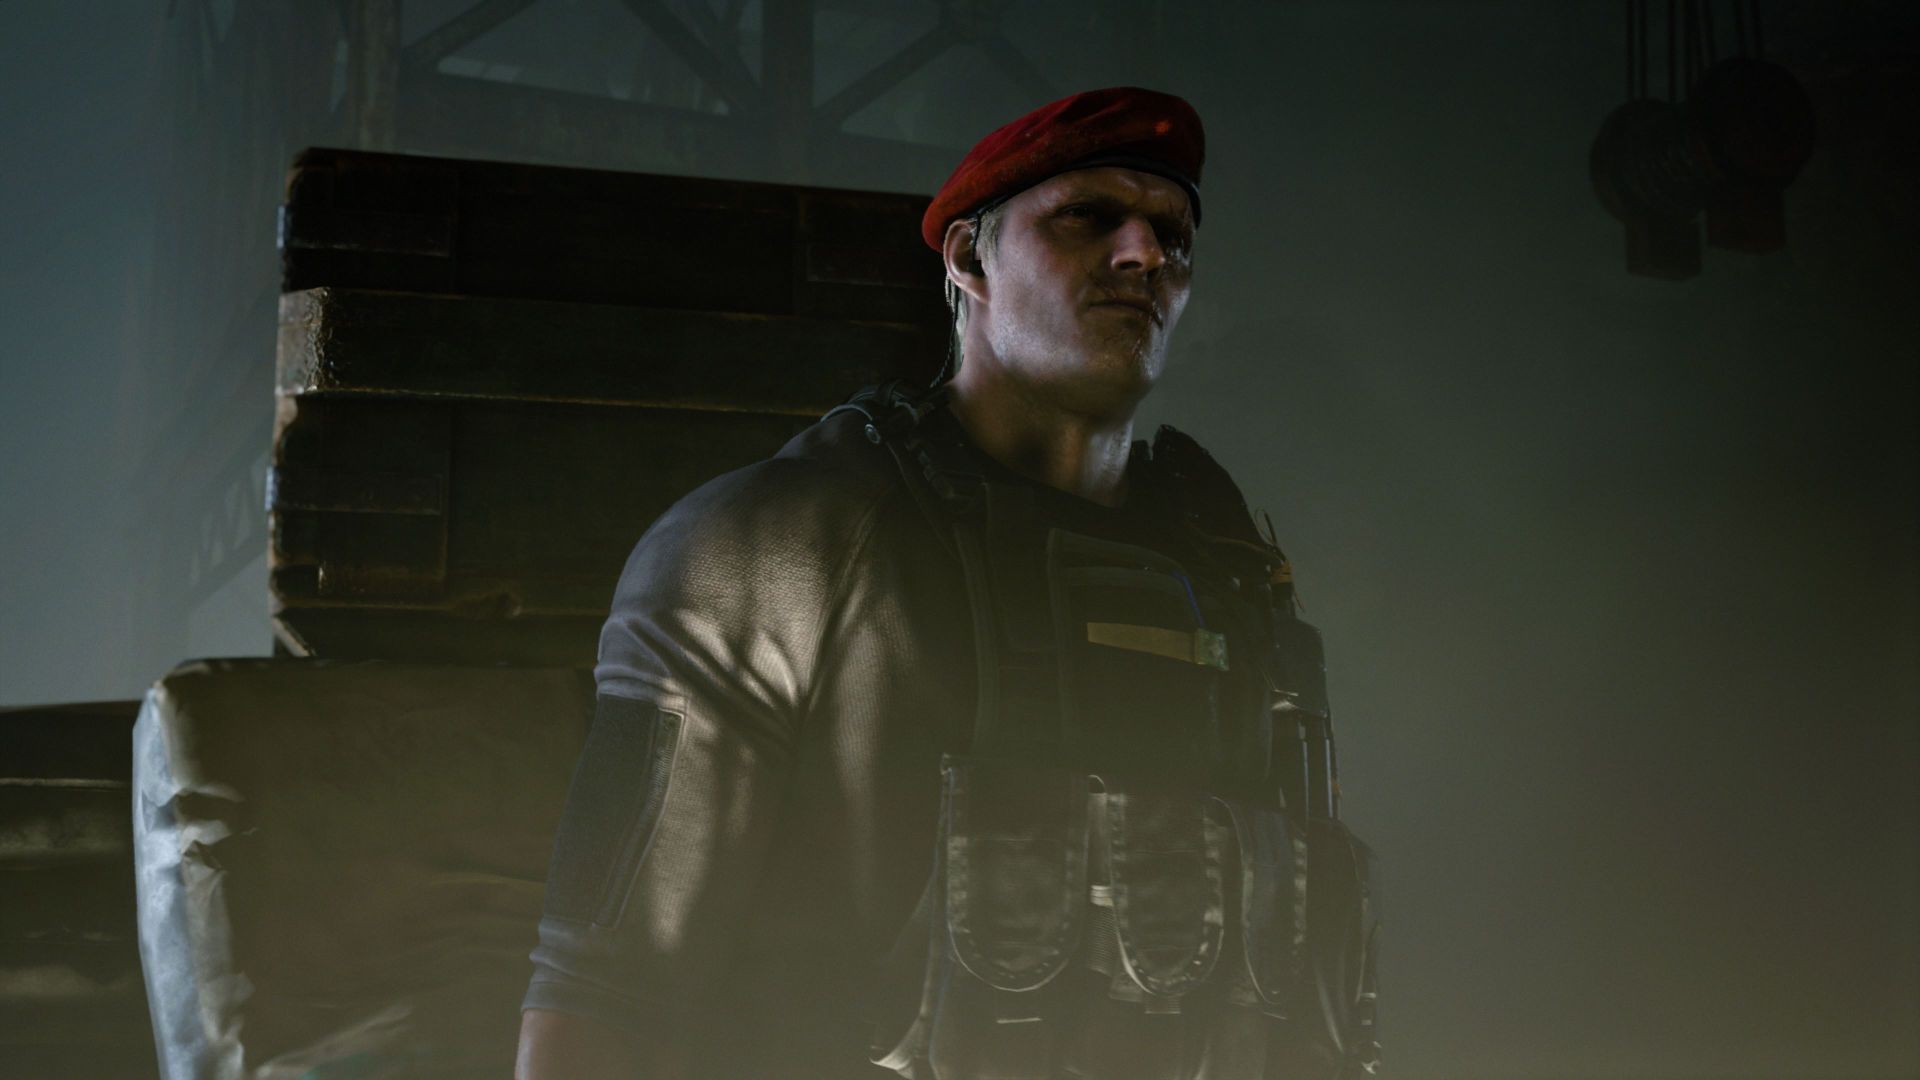 Zrzut ekranu z Resident Evil 4